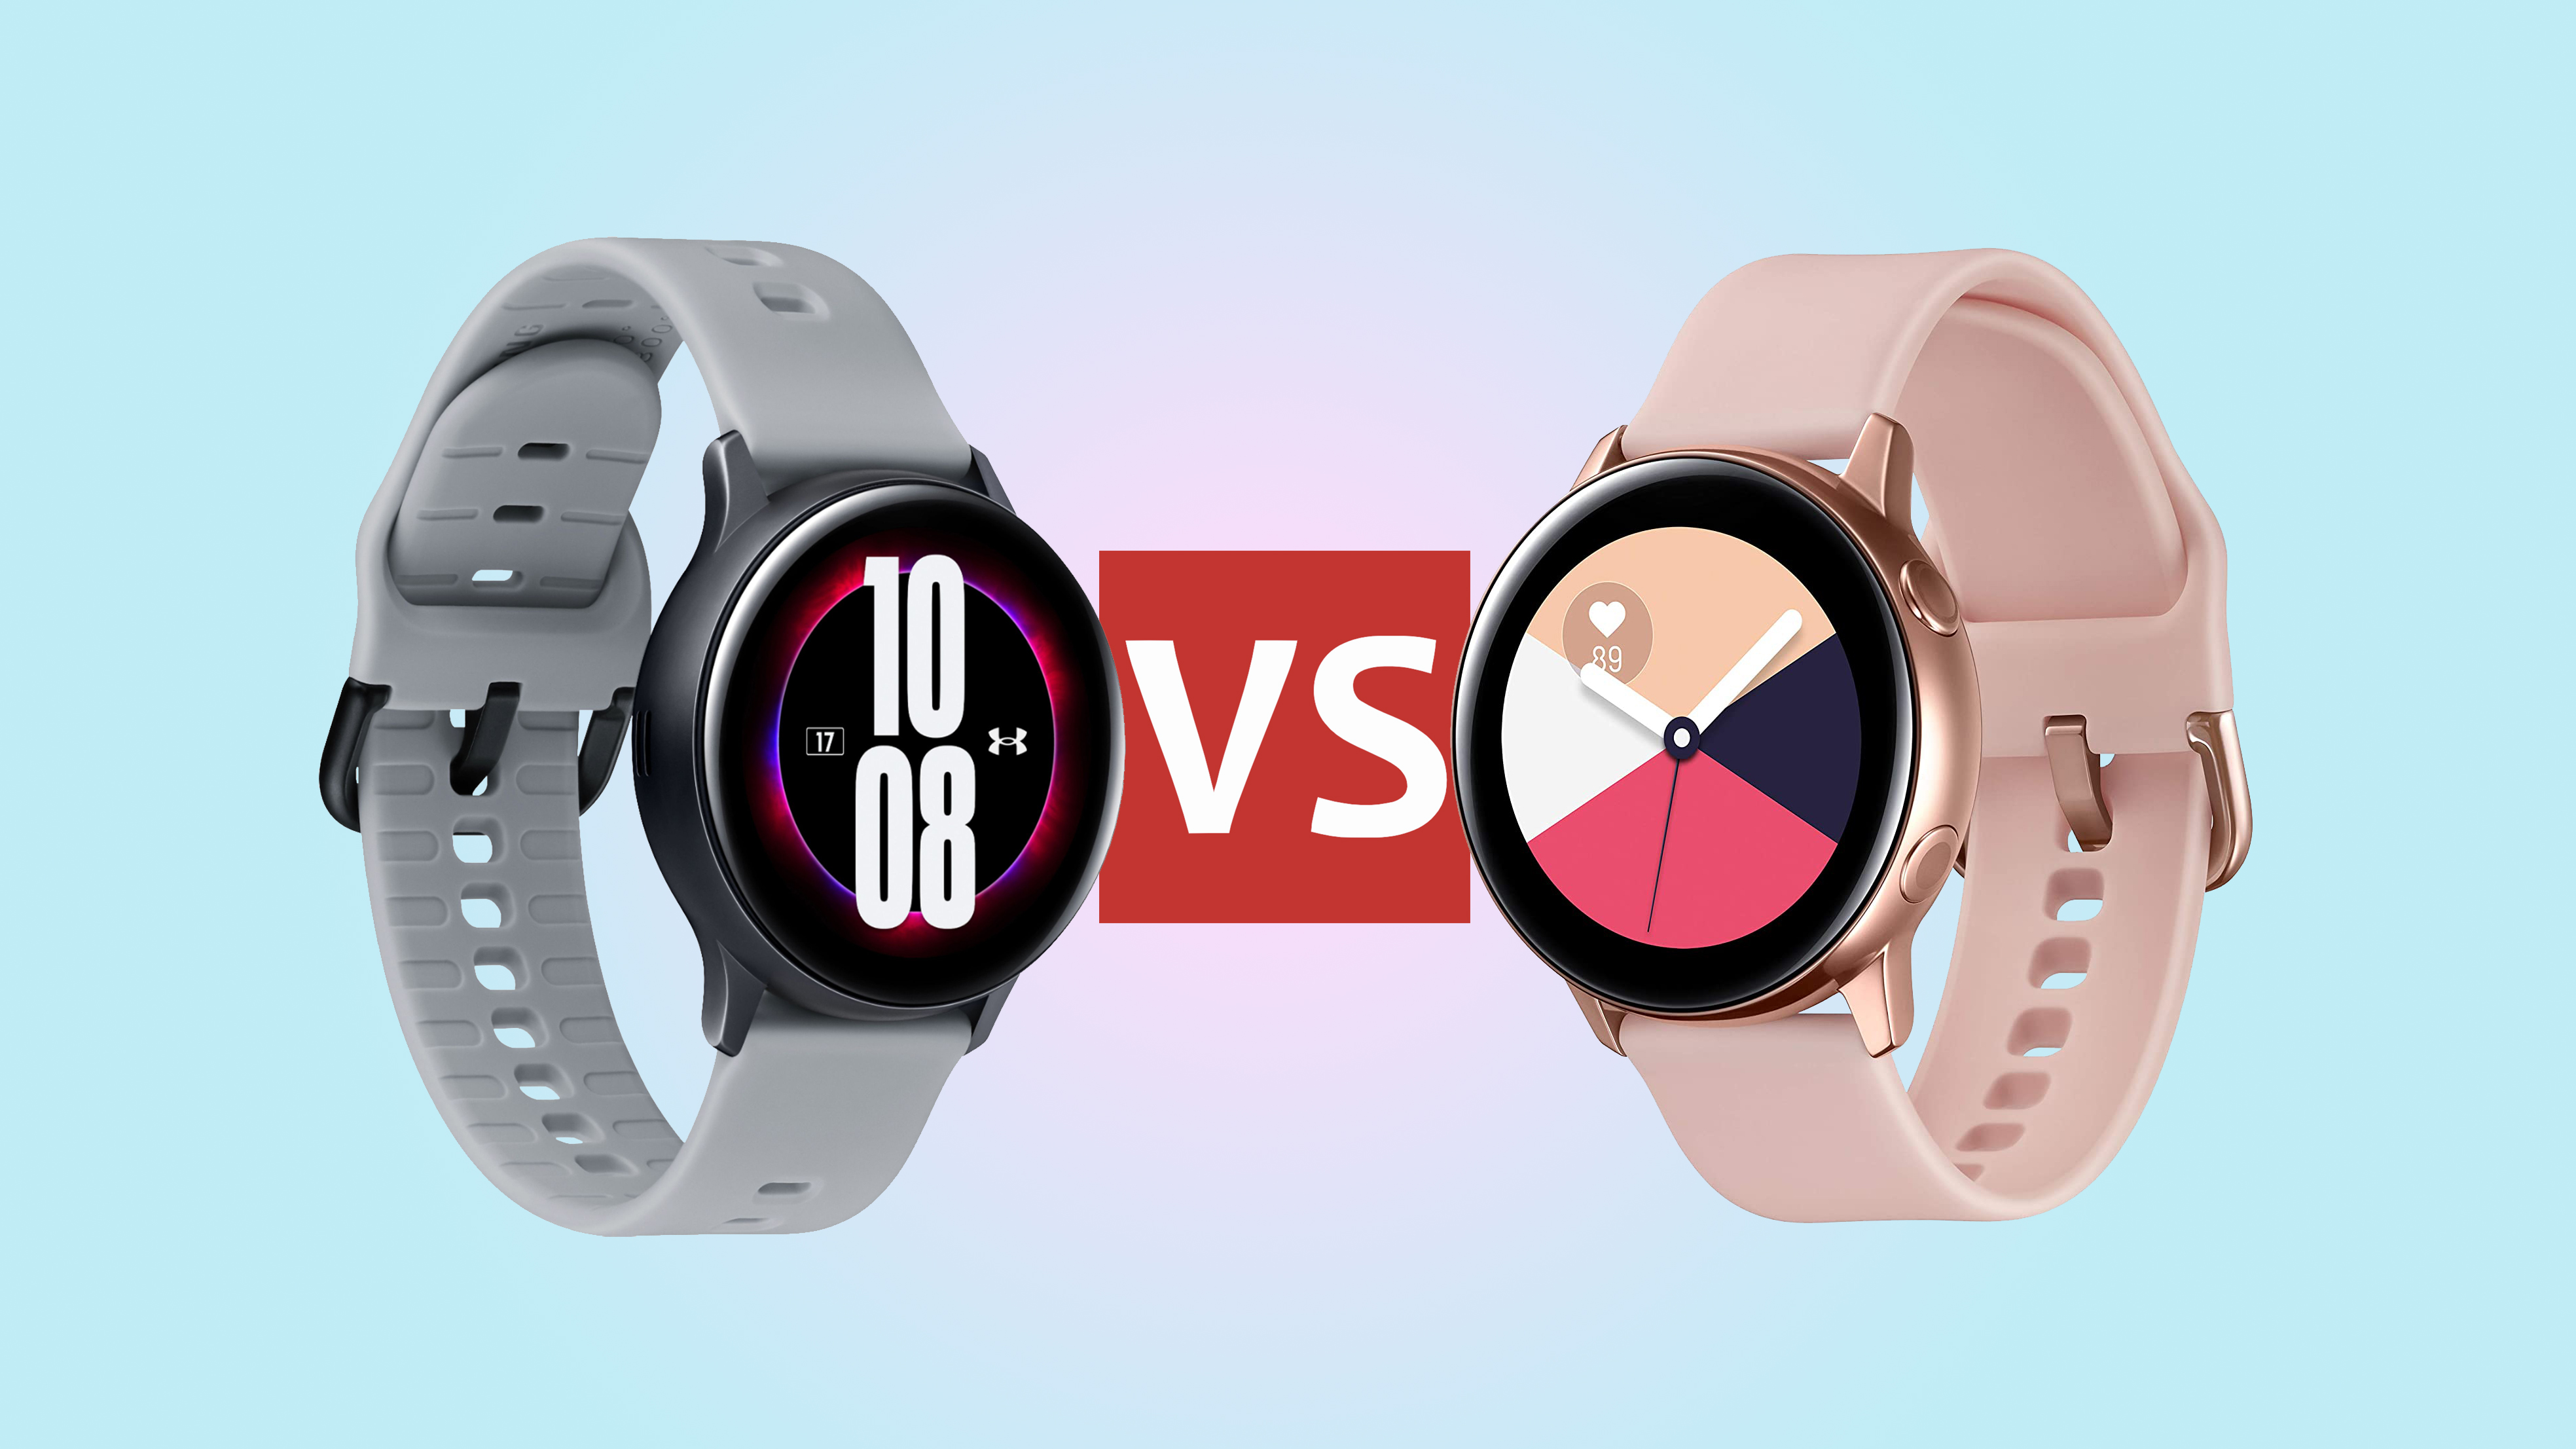 samsung smartwatch active 2 vs galaxy watch 3